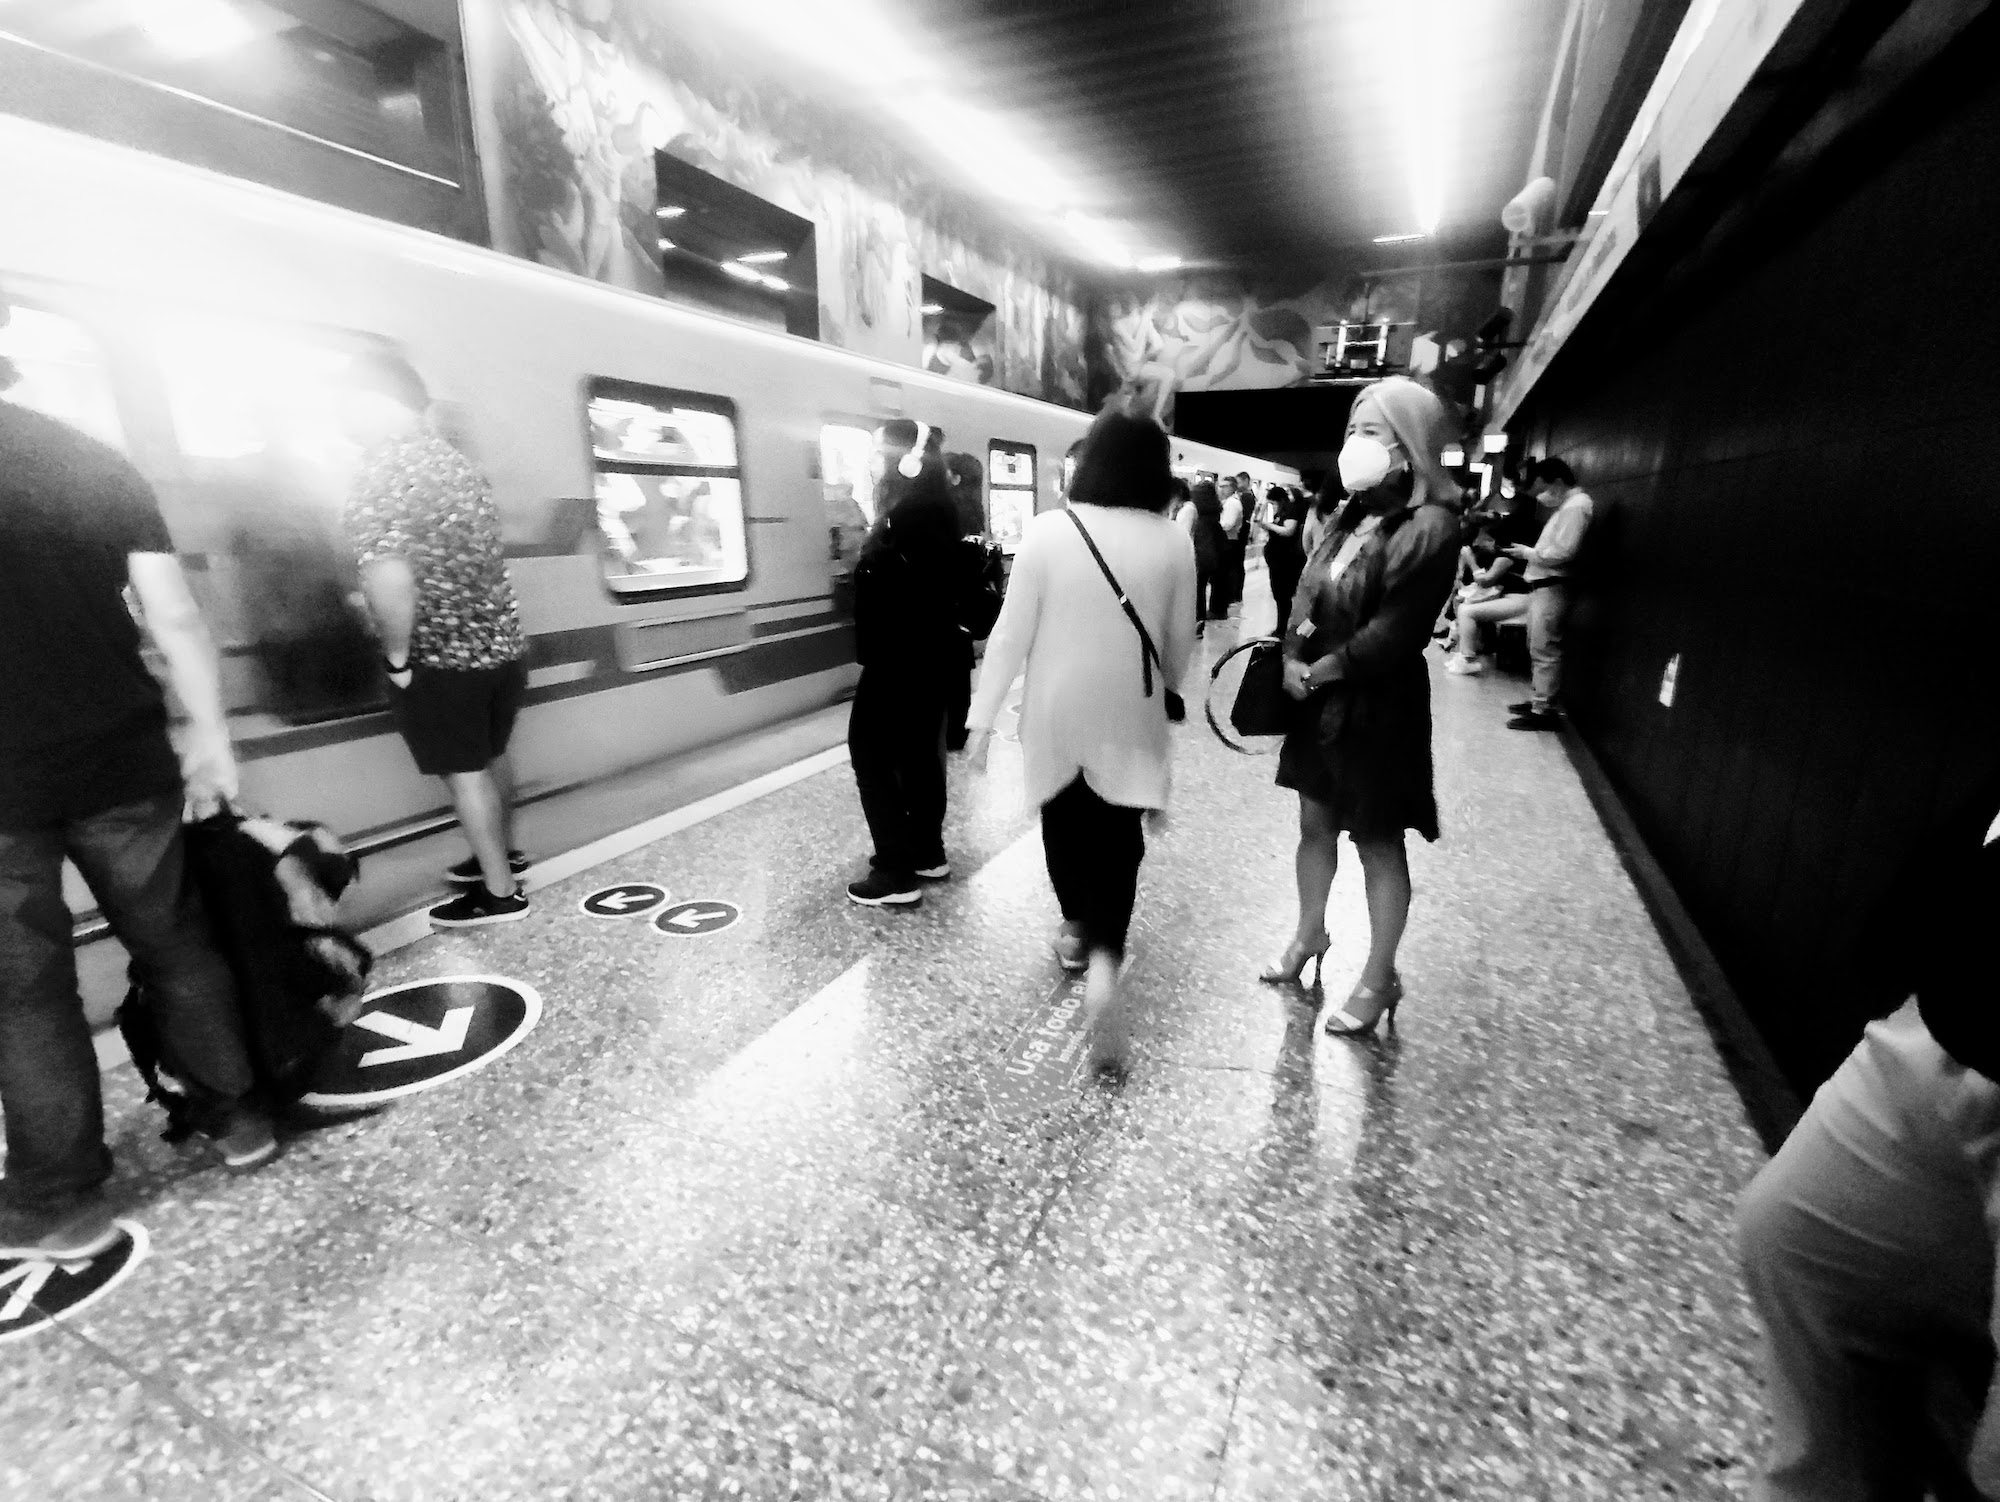 Passengers i platform waiting for subway, Santiago underground (Photo: Luis)